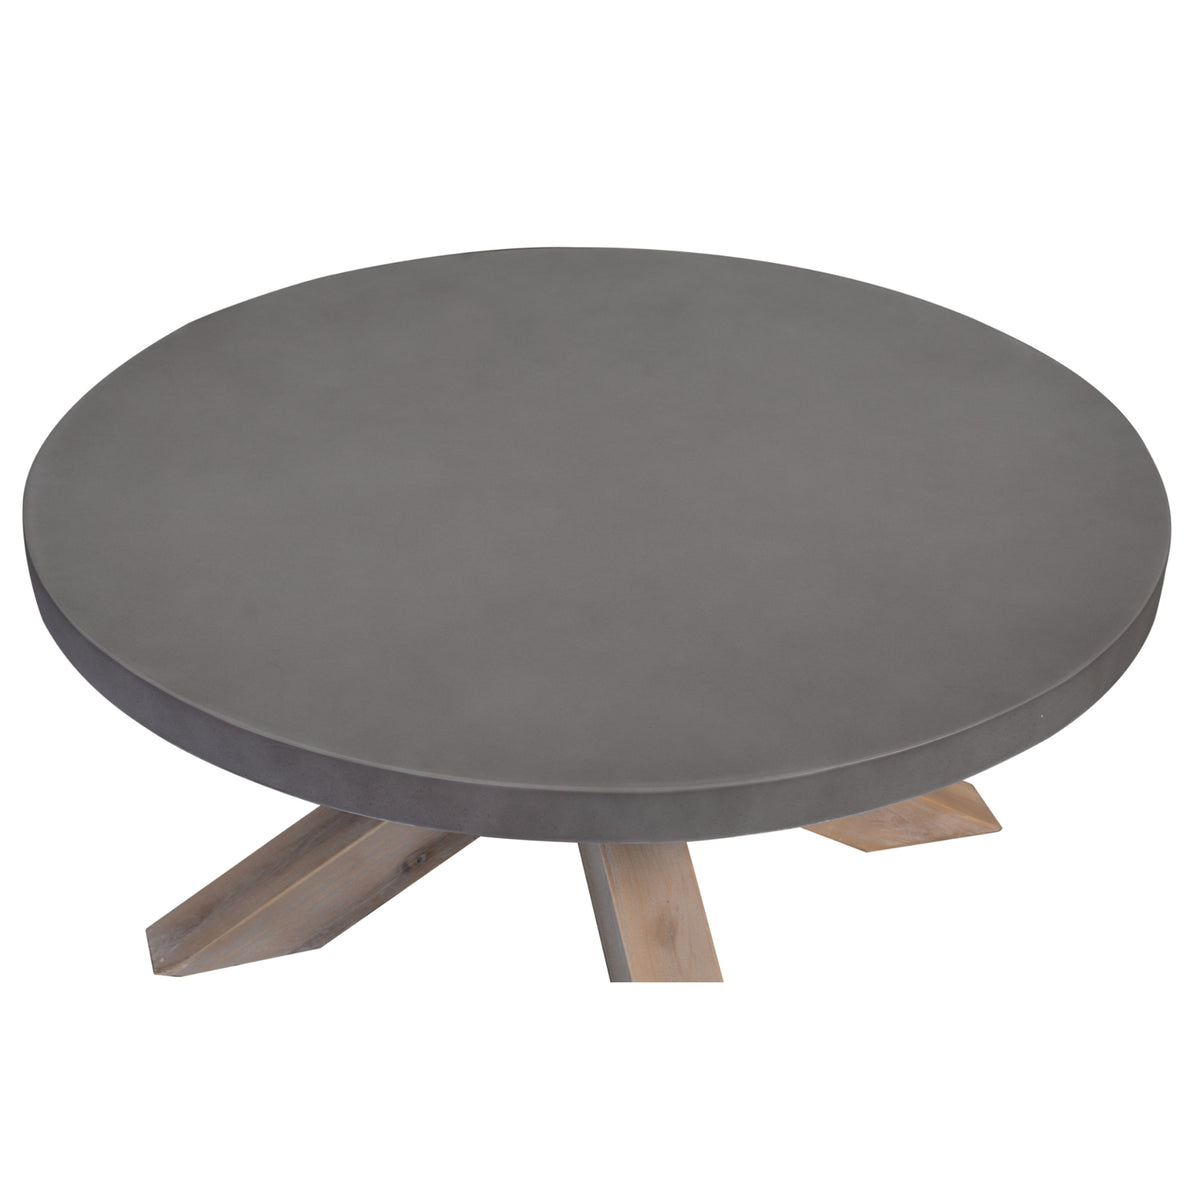 Stony Coffee Table with Concrete Top Grey 85cm - Round